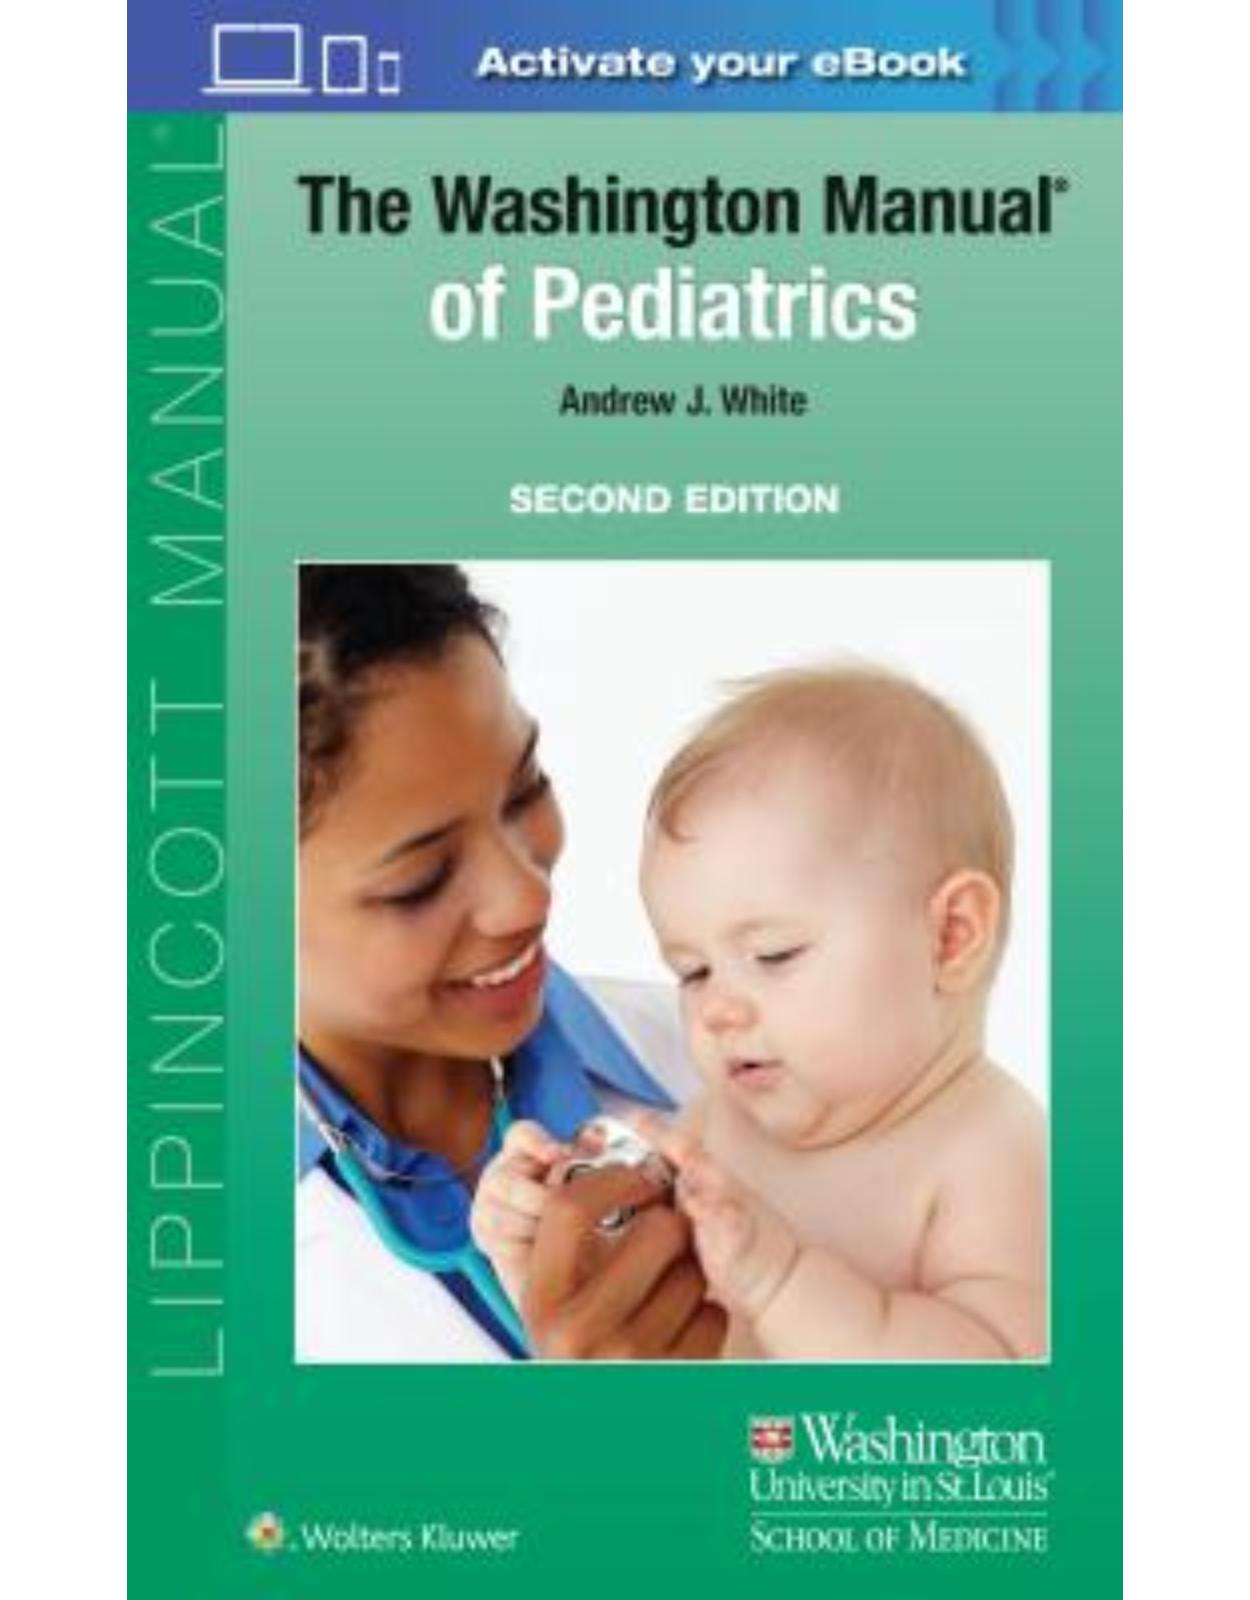 The Washington Manual of Pediatrics (Spiral Manual Series) (Lippincott Manual Series (Formerly Known as the Spiral Manual Series))